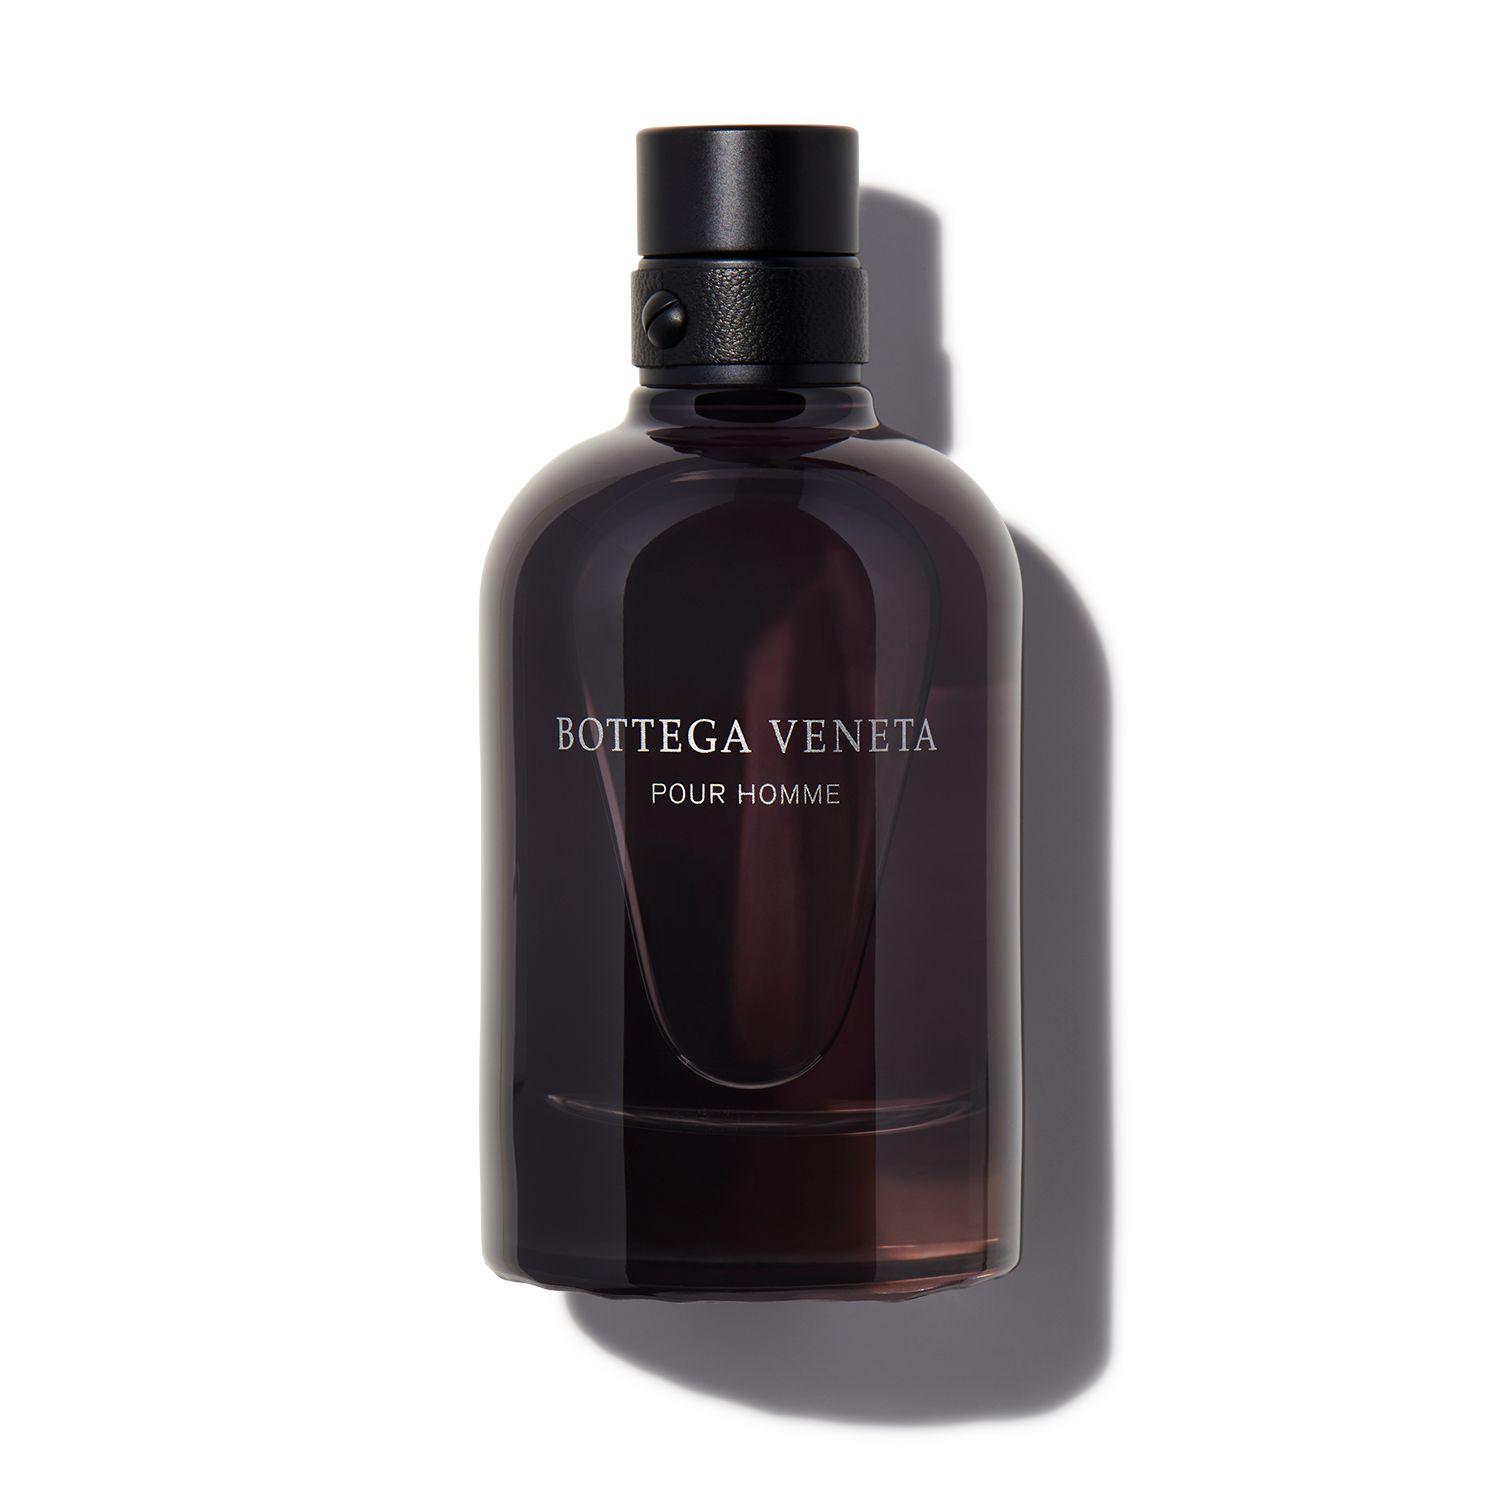 Bottega Veneta Bottega Veneta Pour per for Homme Scentbird | $16.95 month